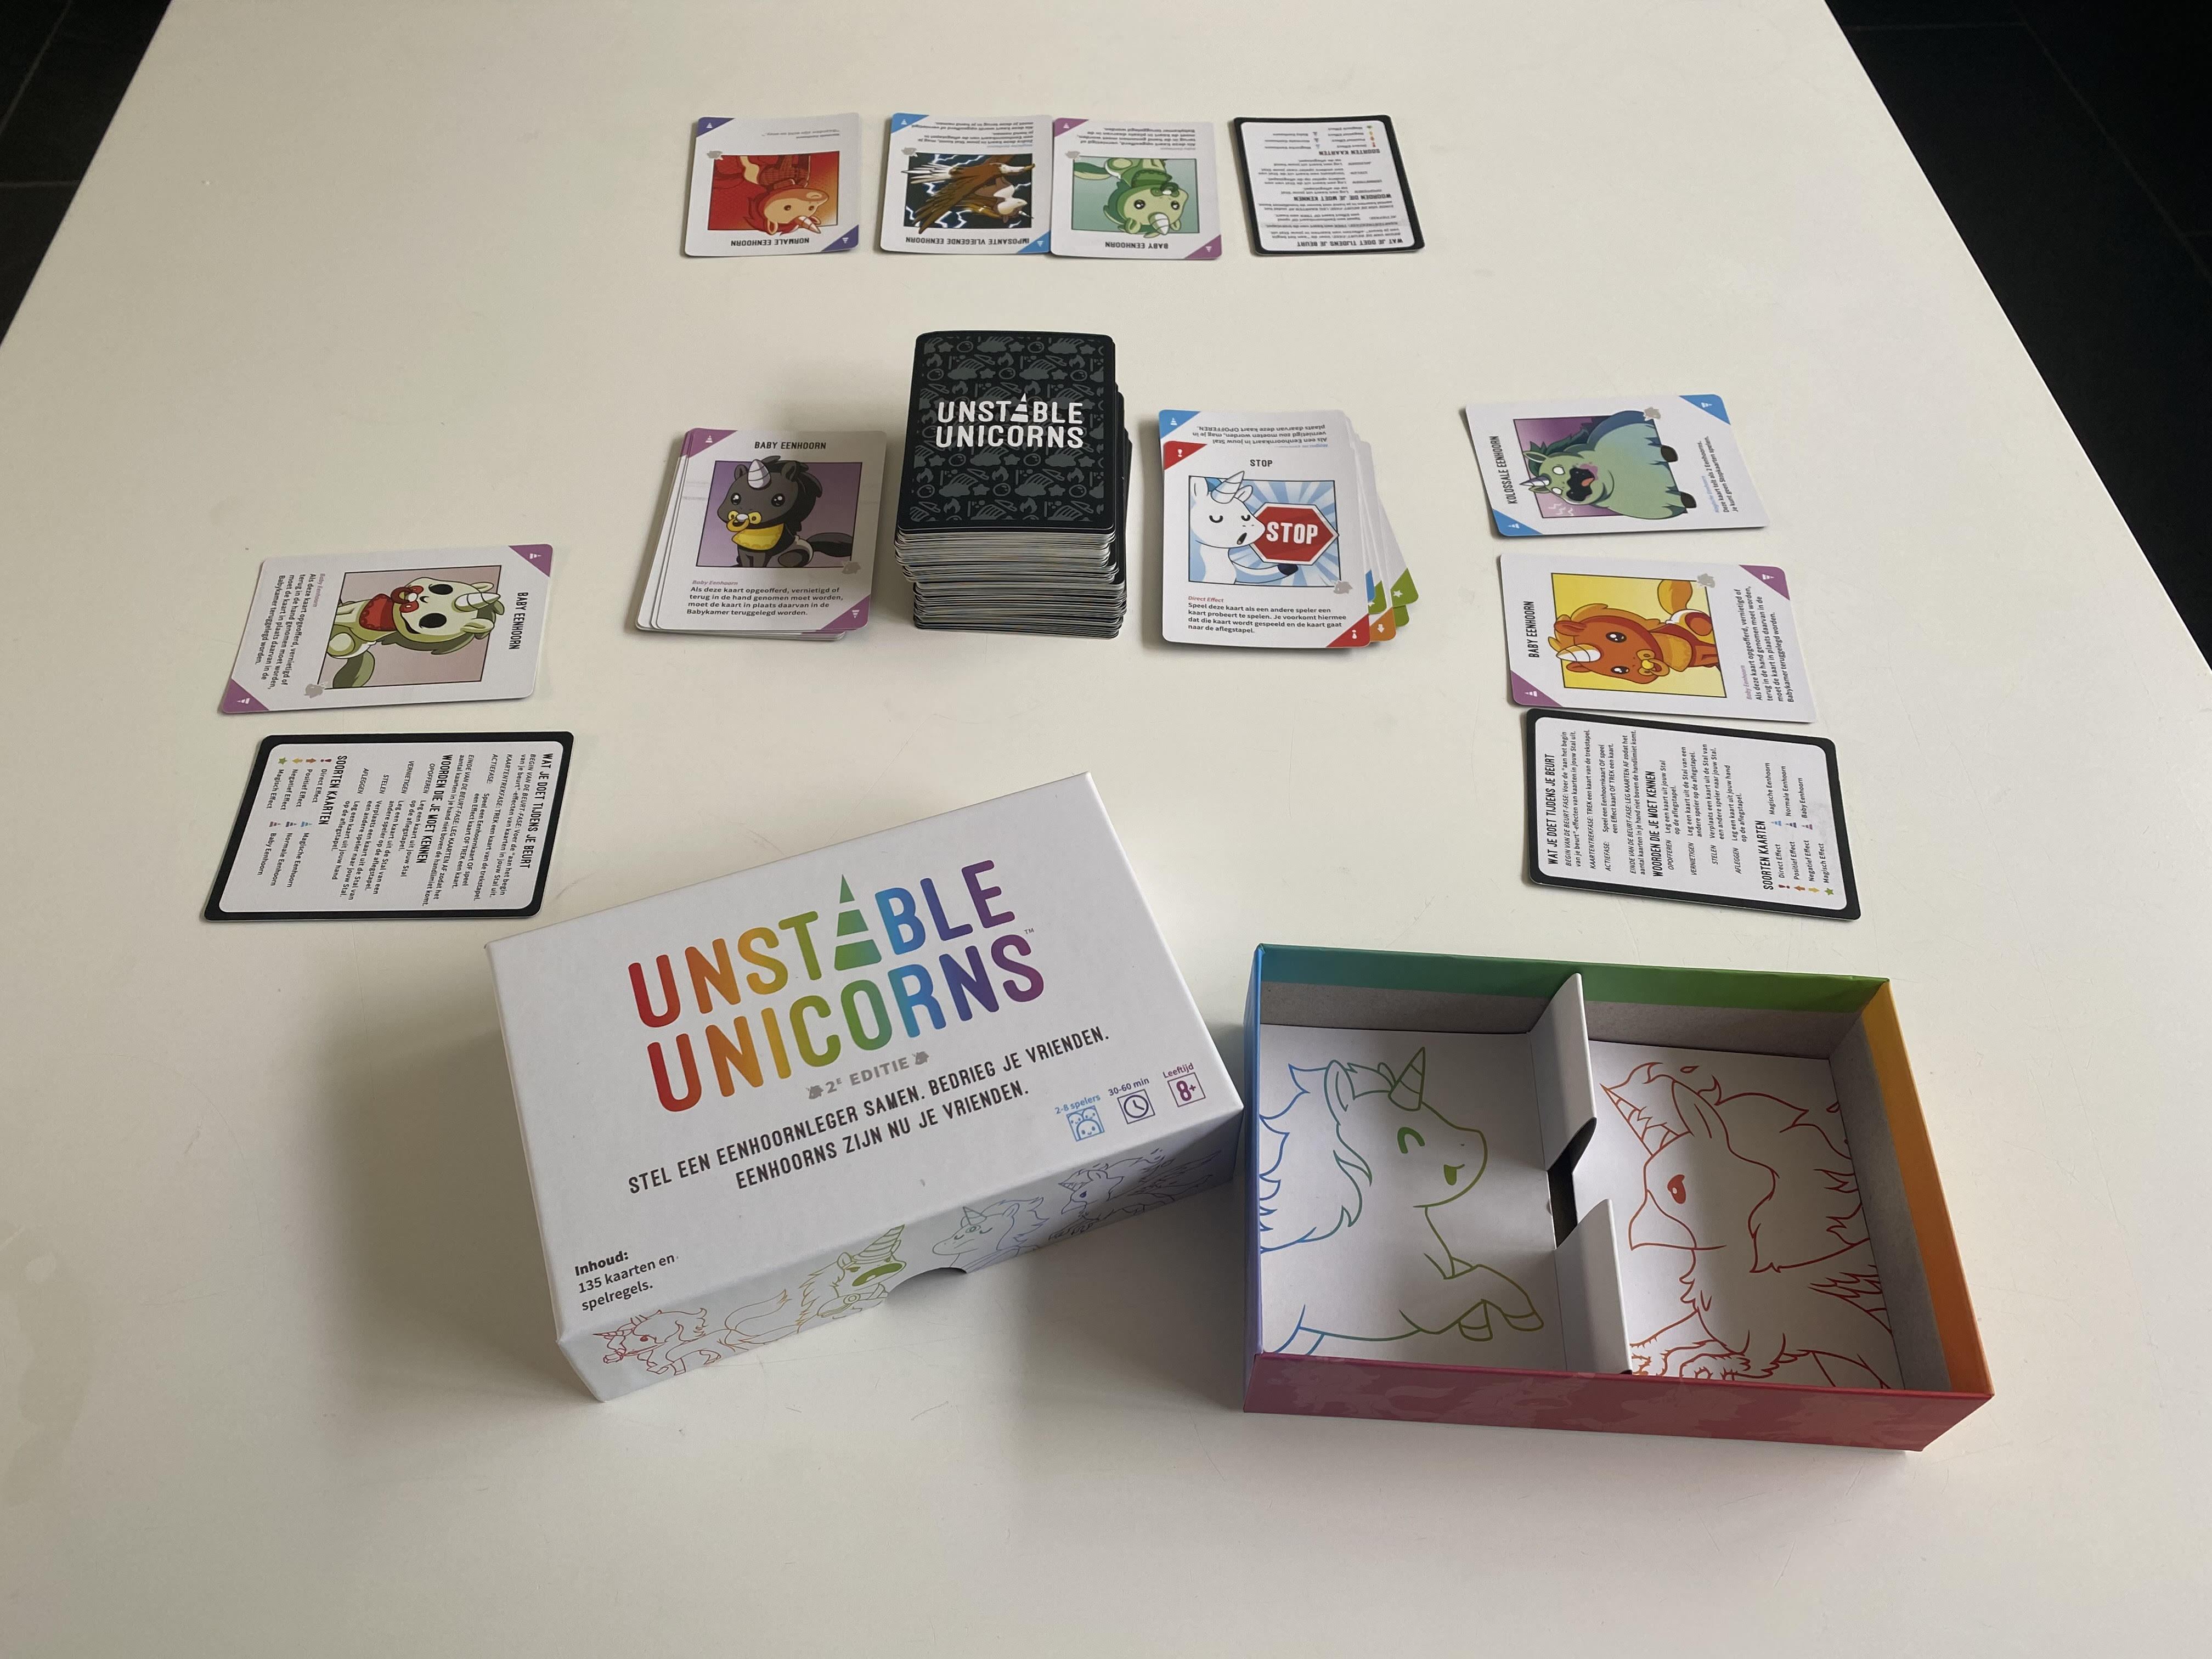 Unstable Unicorns! van Unbox Now